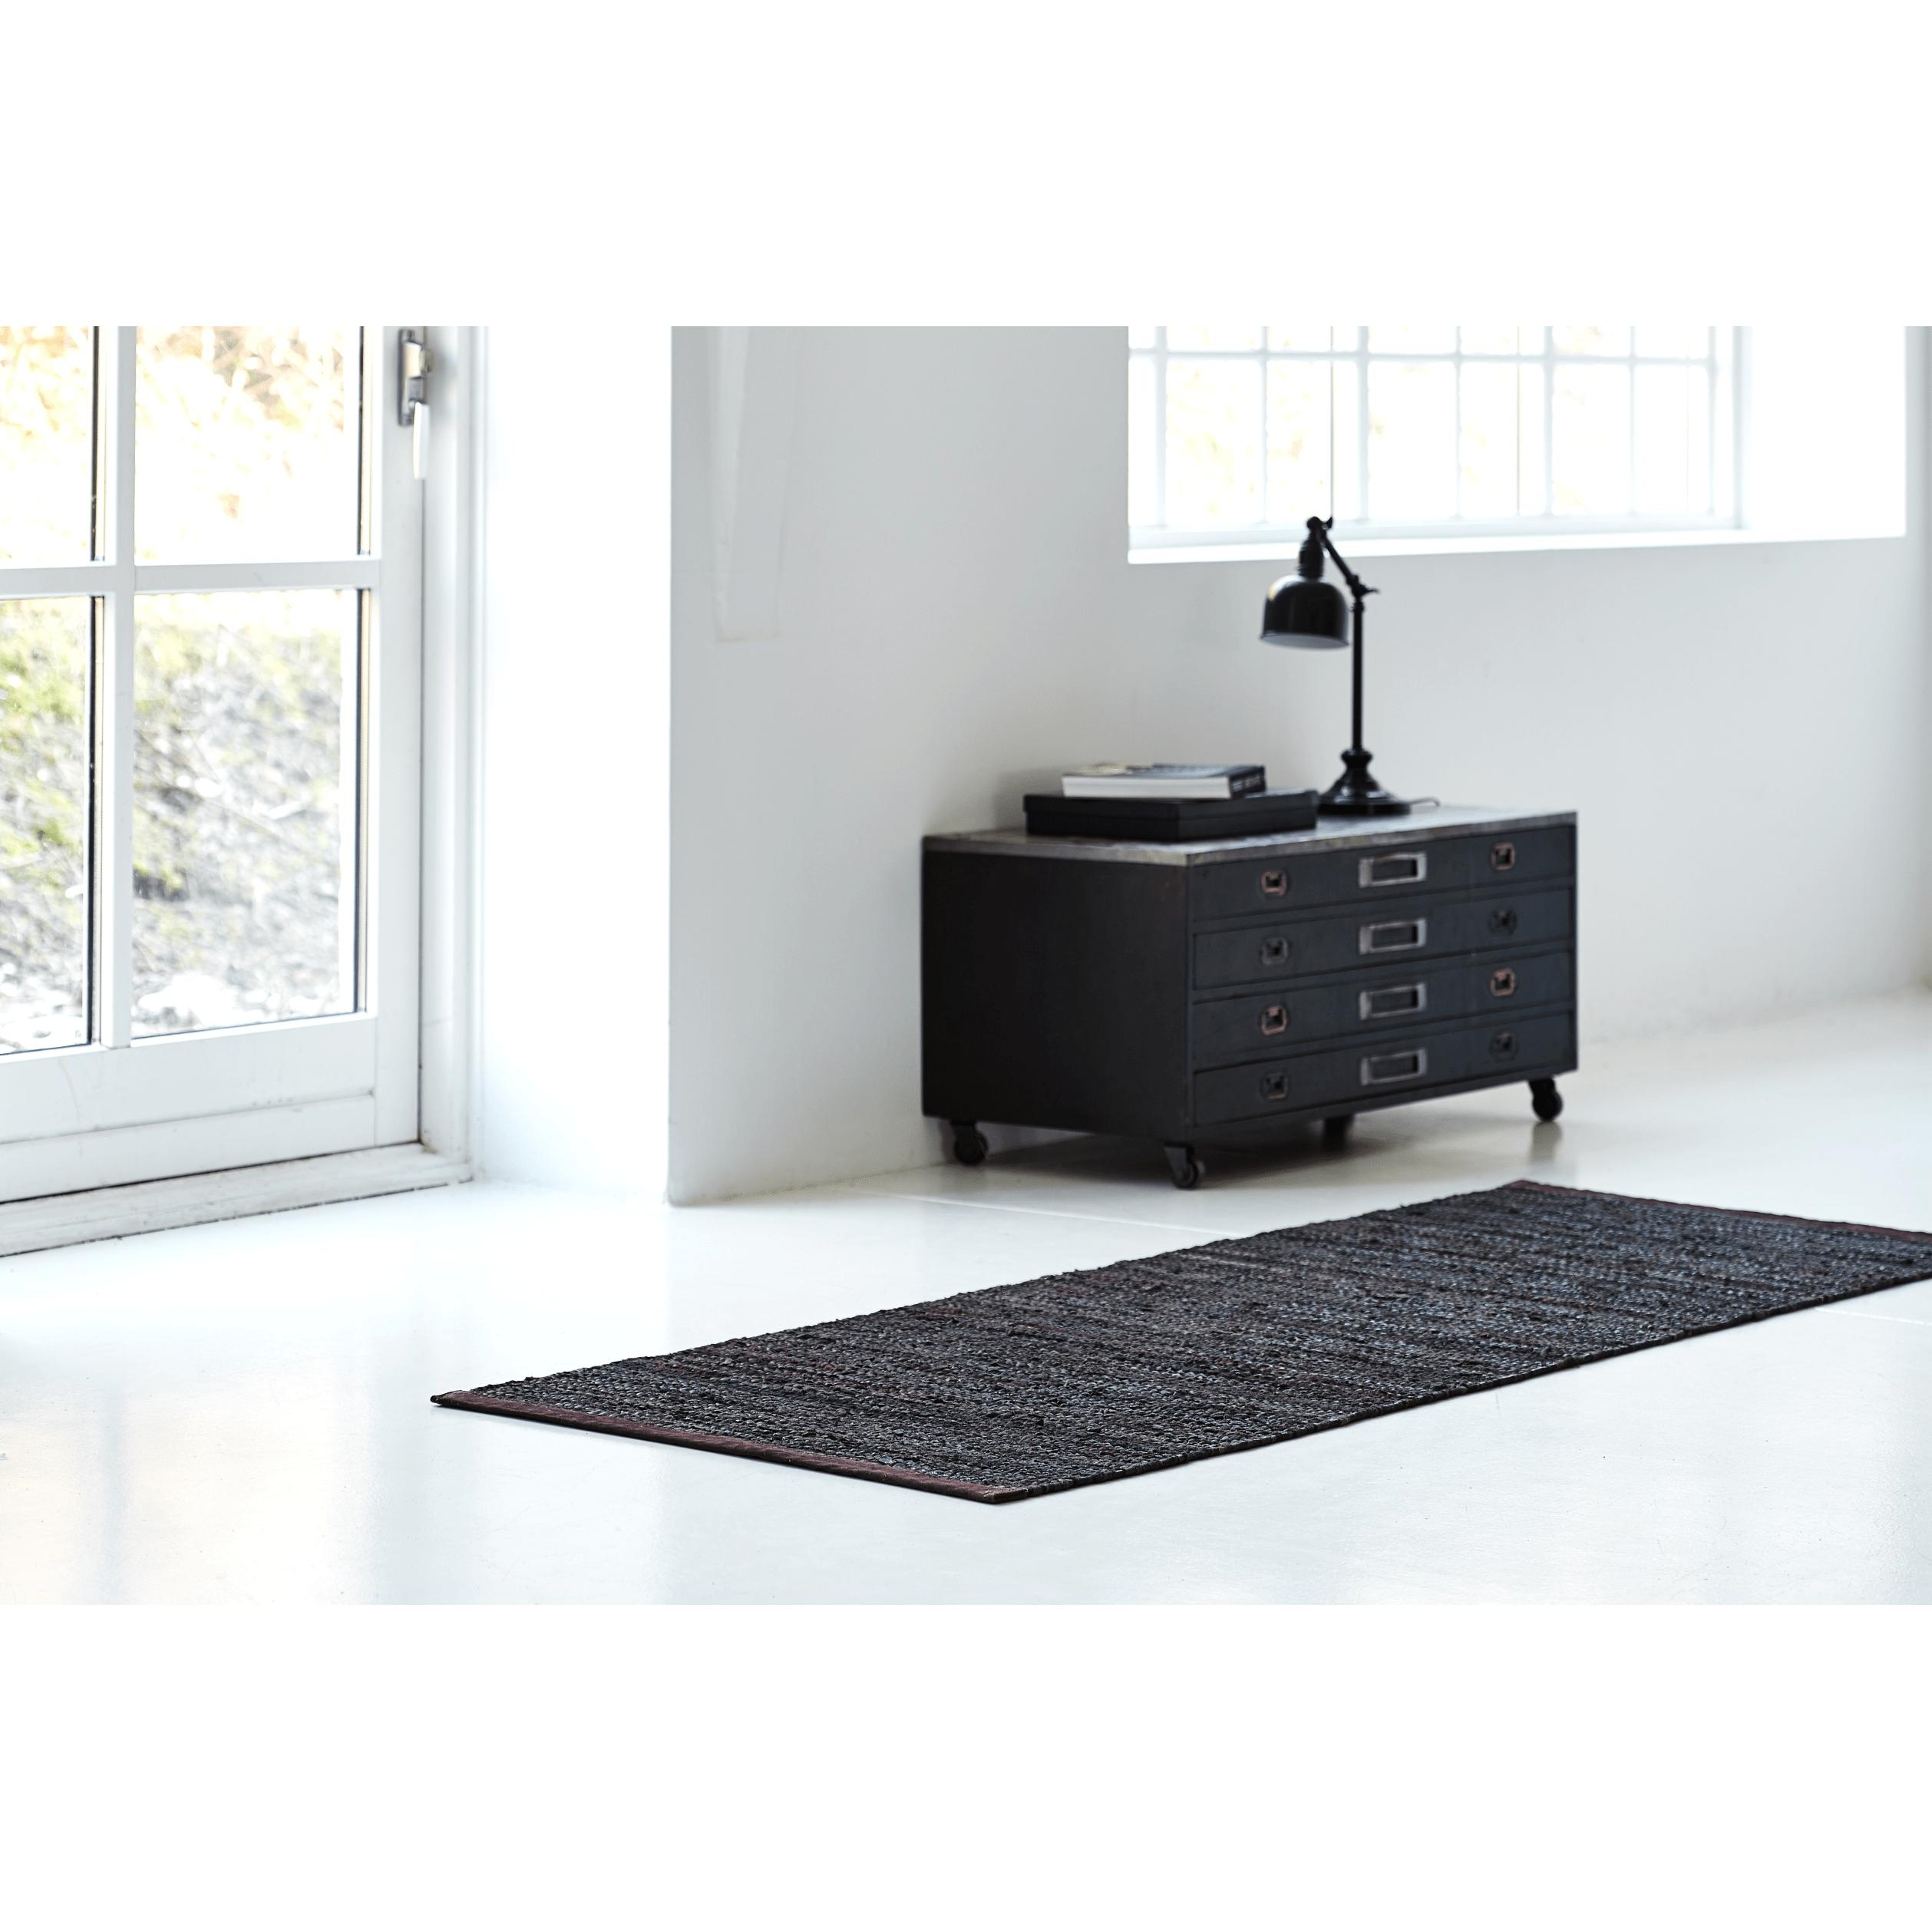 Rug Solid Leer tapijt choco, 200 x 300 cm